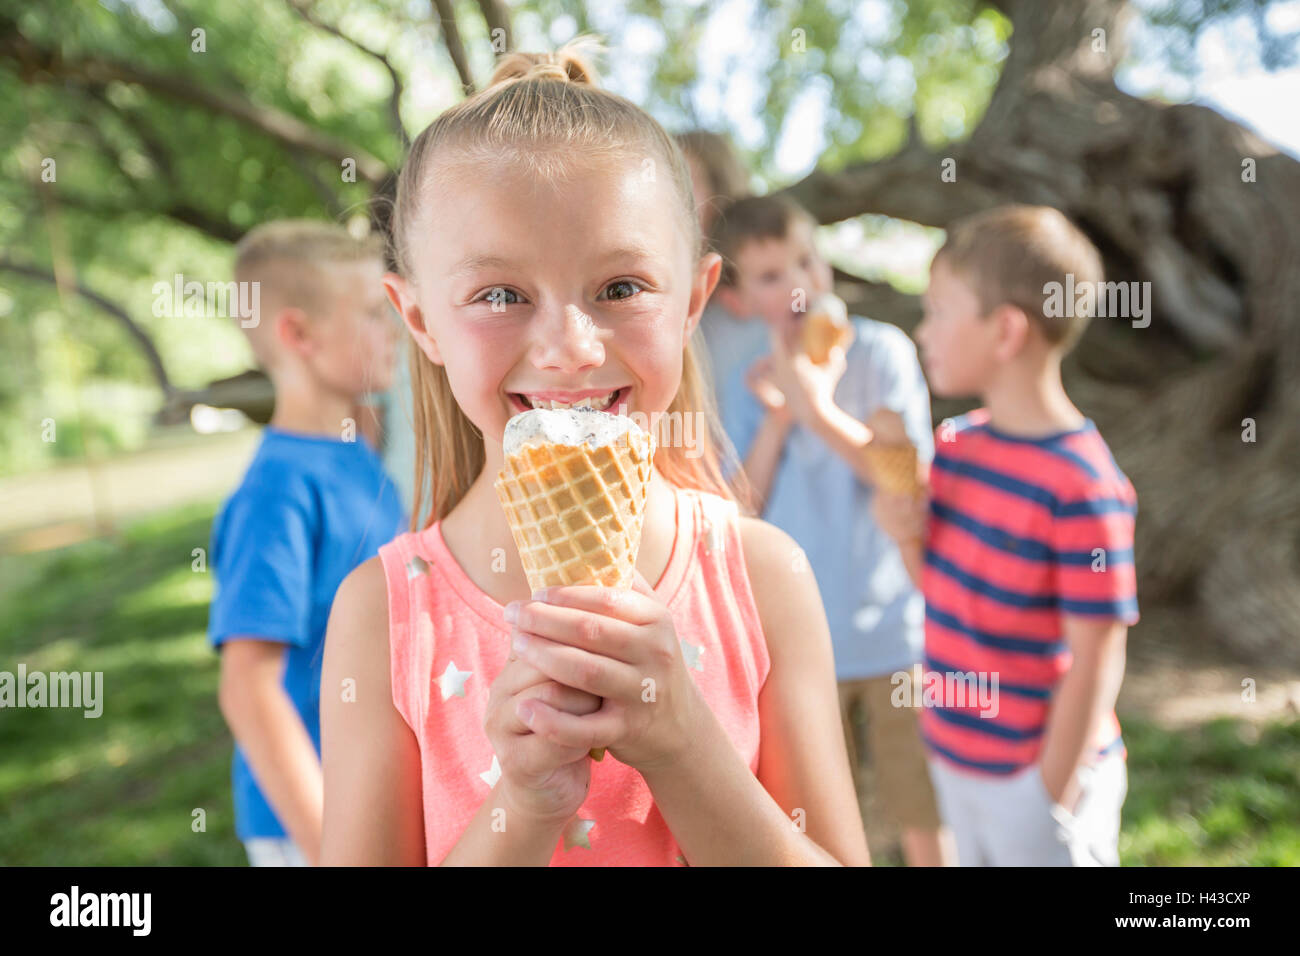 Caucasian girl eating ice cream cone Banque D'Images